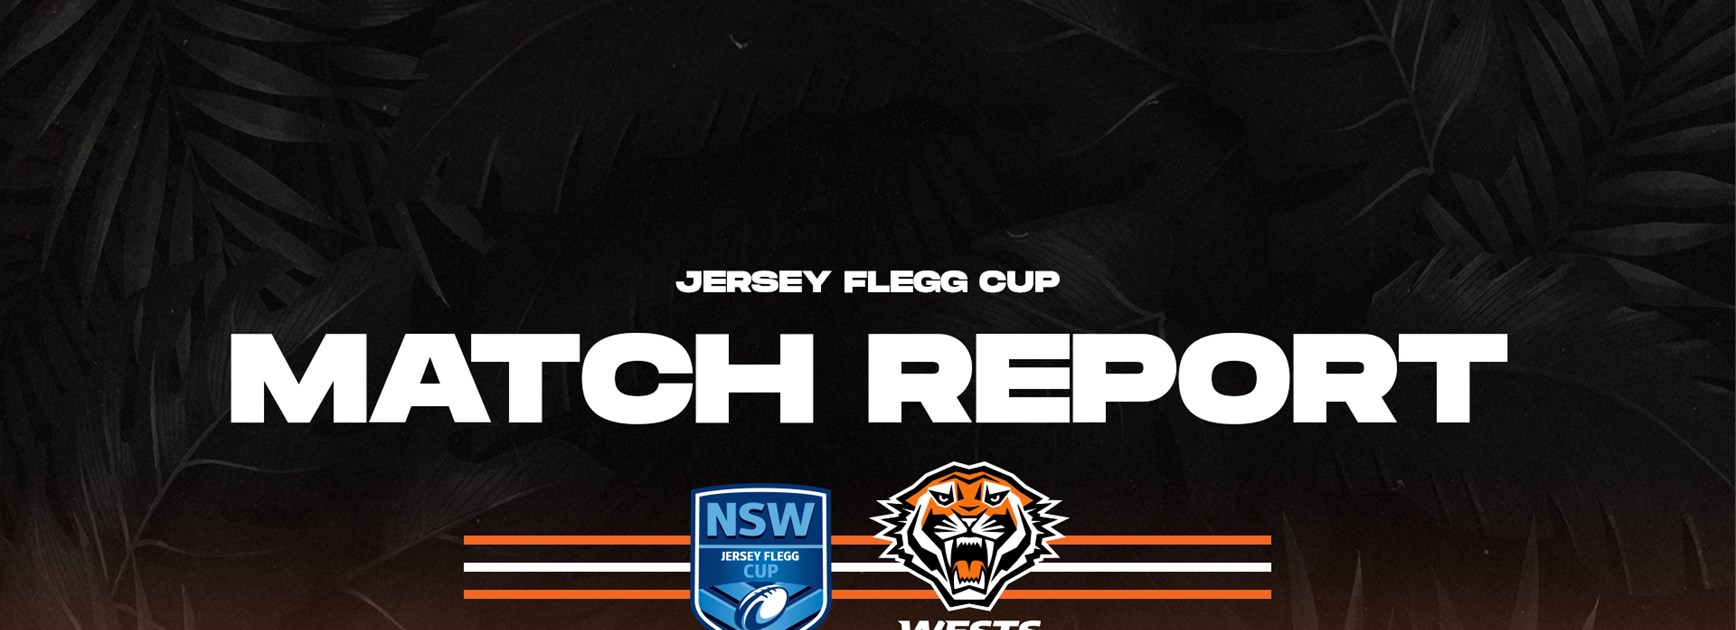 Match Report: Jersey Flegg Cup Round 25 vs Sharks